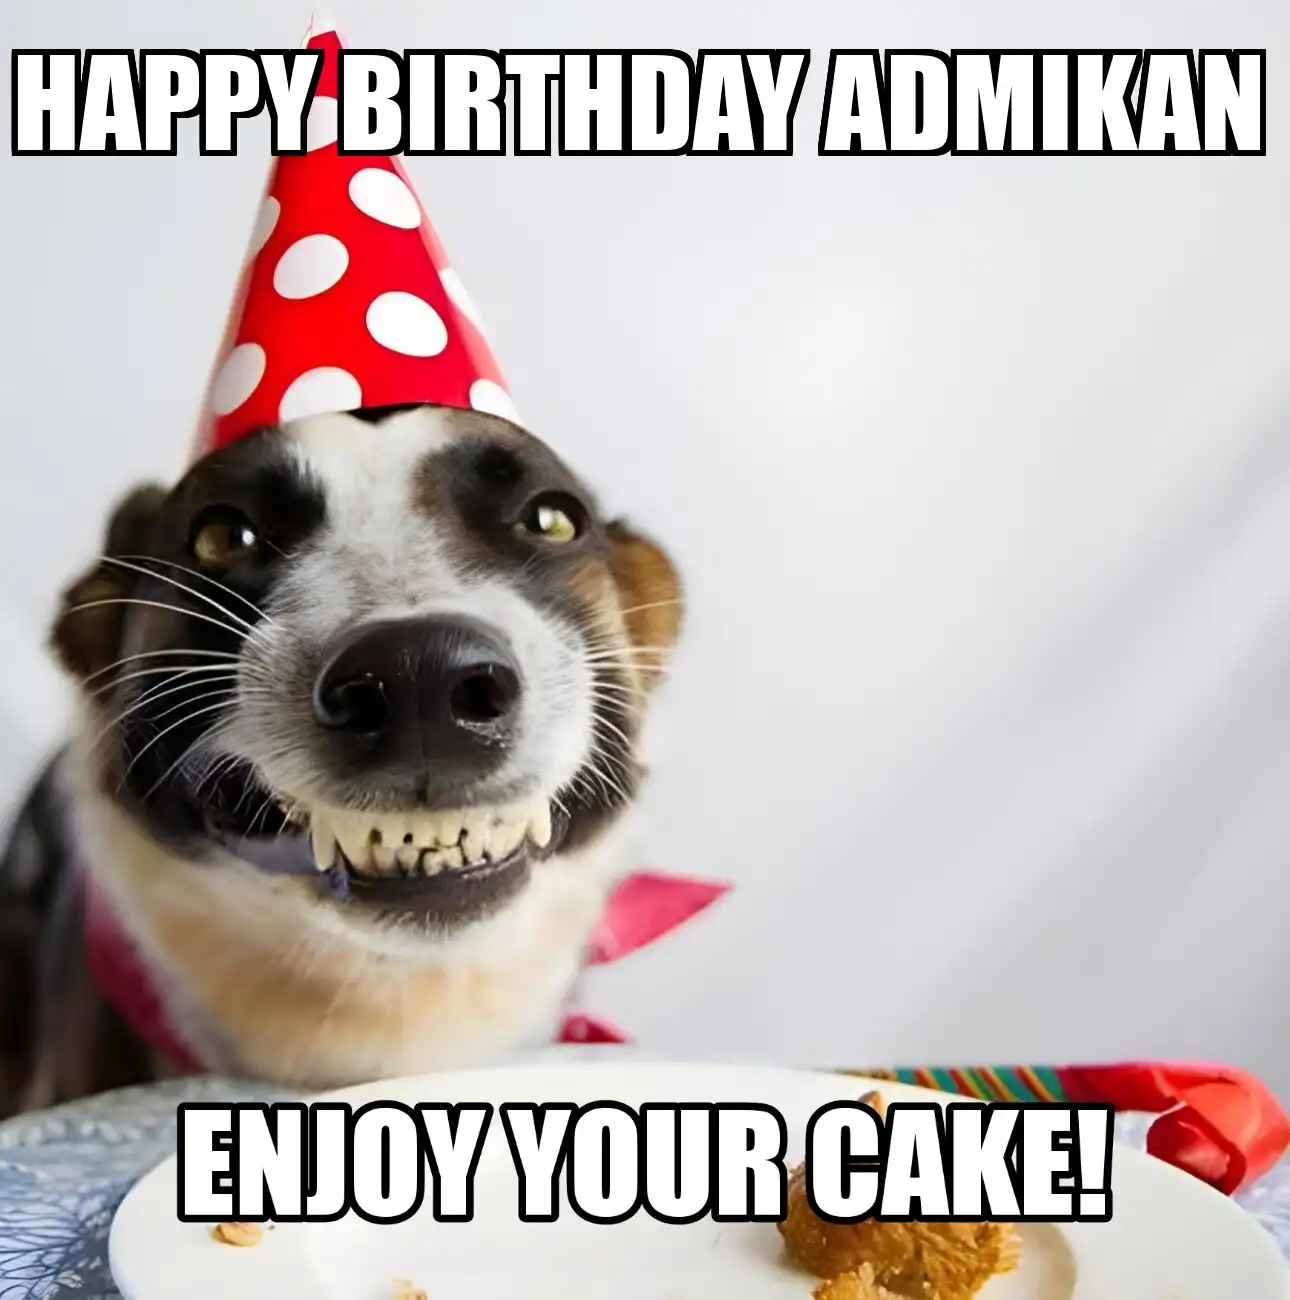 Happy Birthday Admikan Enjoy Your Cake Dog Meme